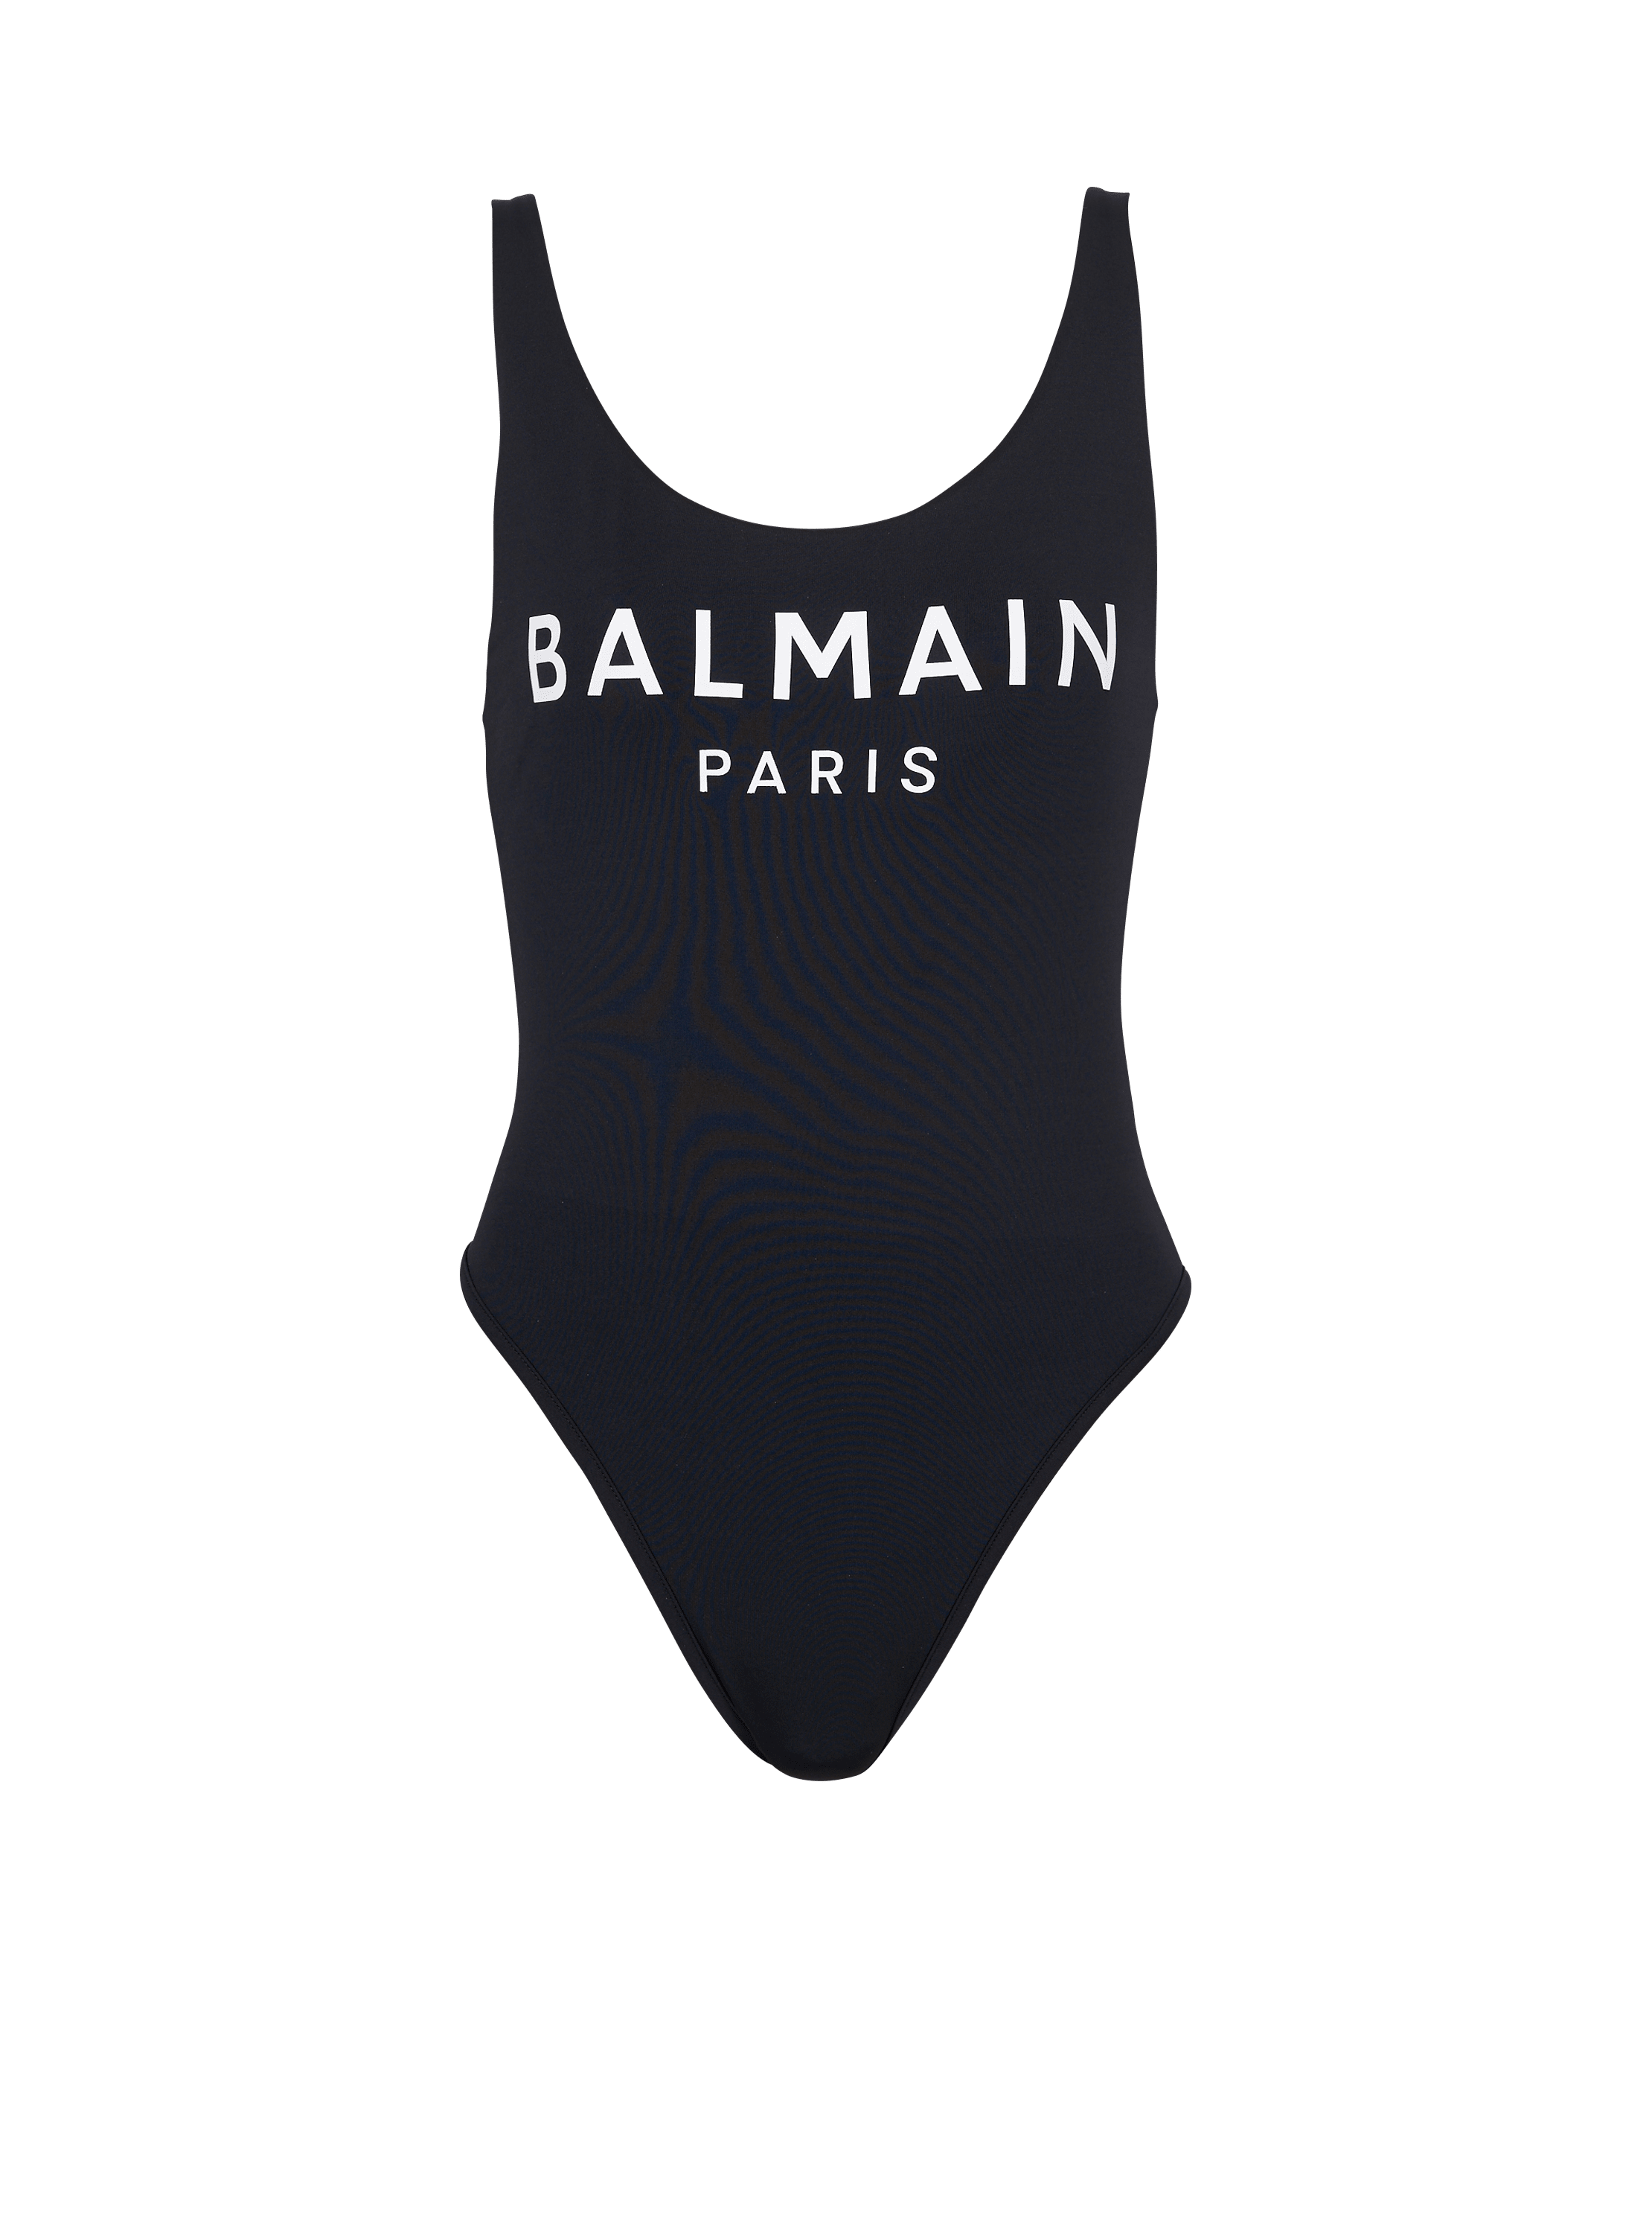 BALMAIN Paris泳衣, black, hi-res